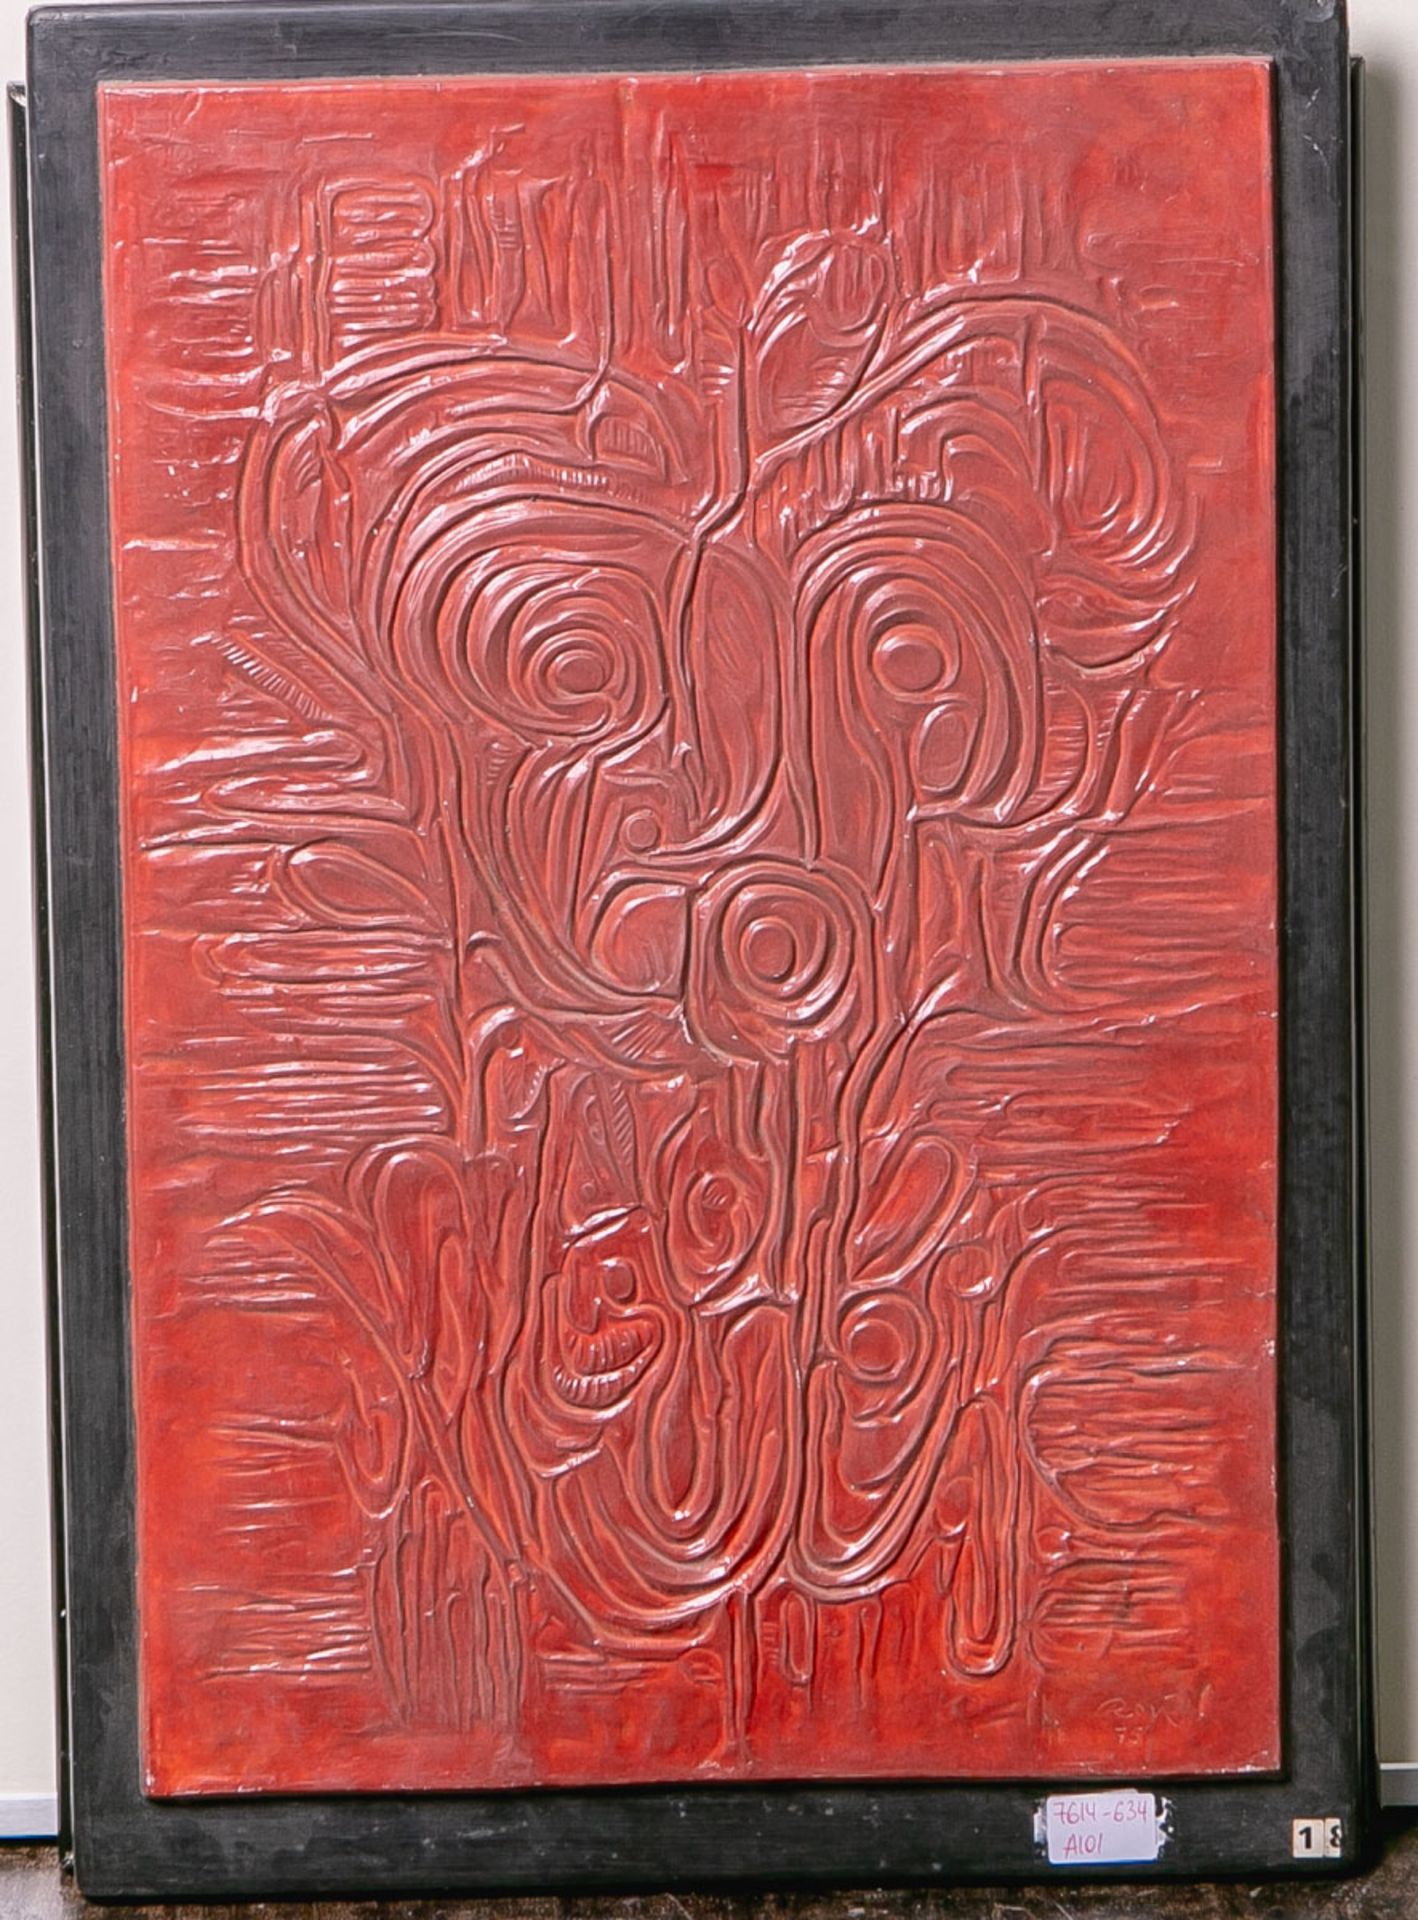 Oskar, R. (20. Jh.), ohne Titel, Wandreliefplatte m. abstrakter Darstellung in Rot, sign. u. dat. (